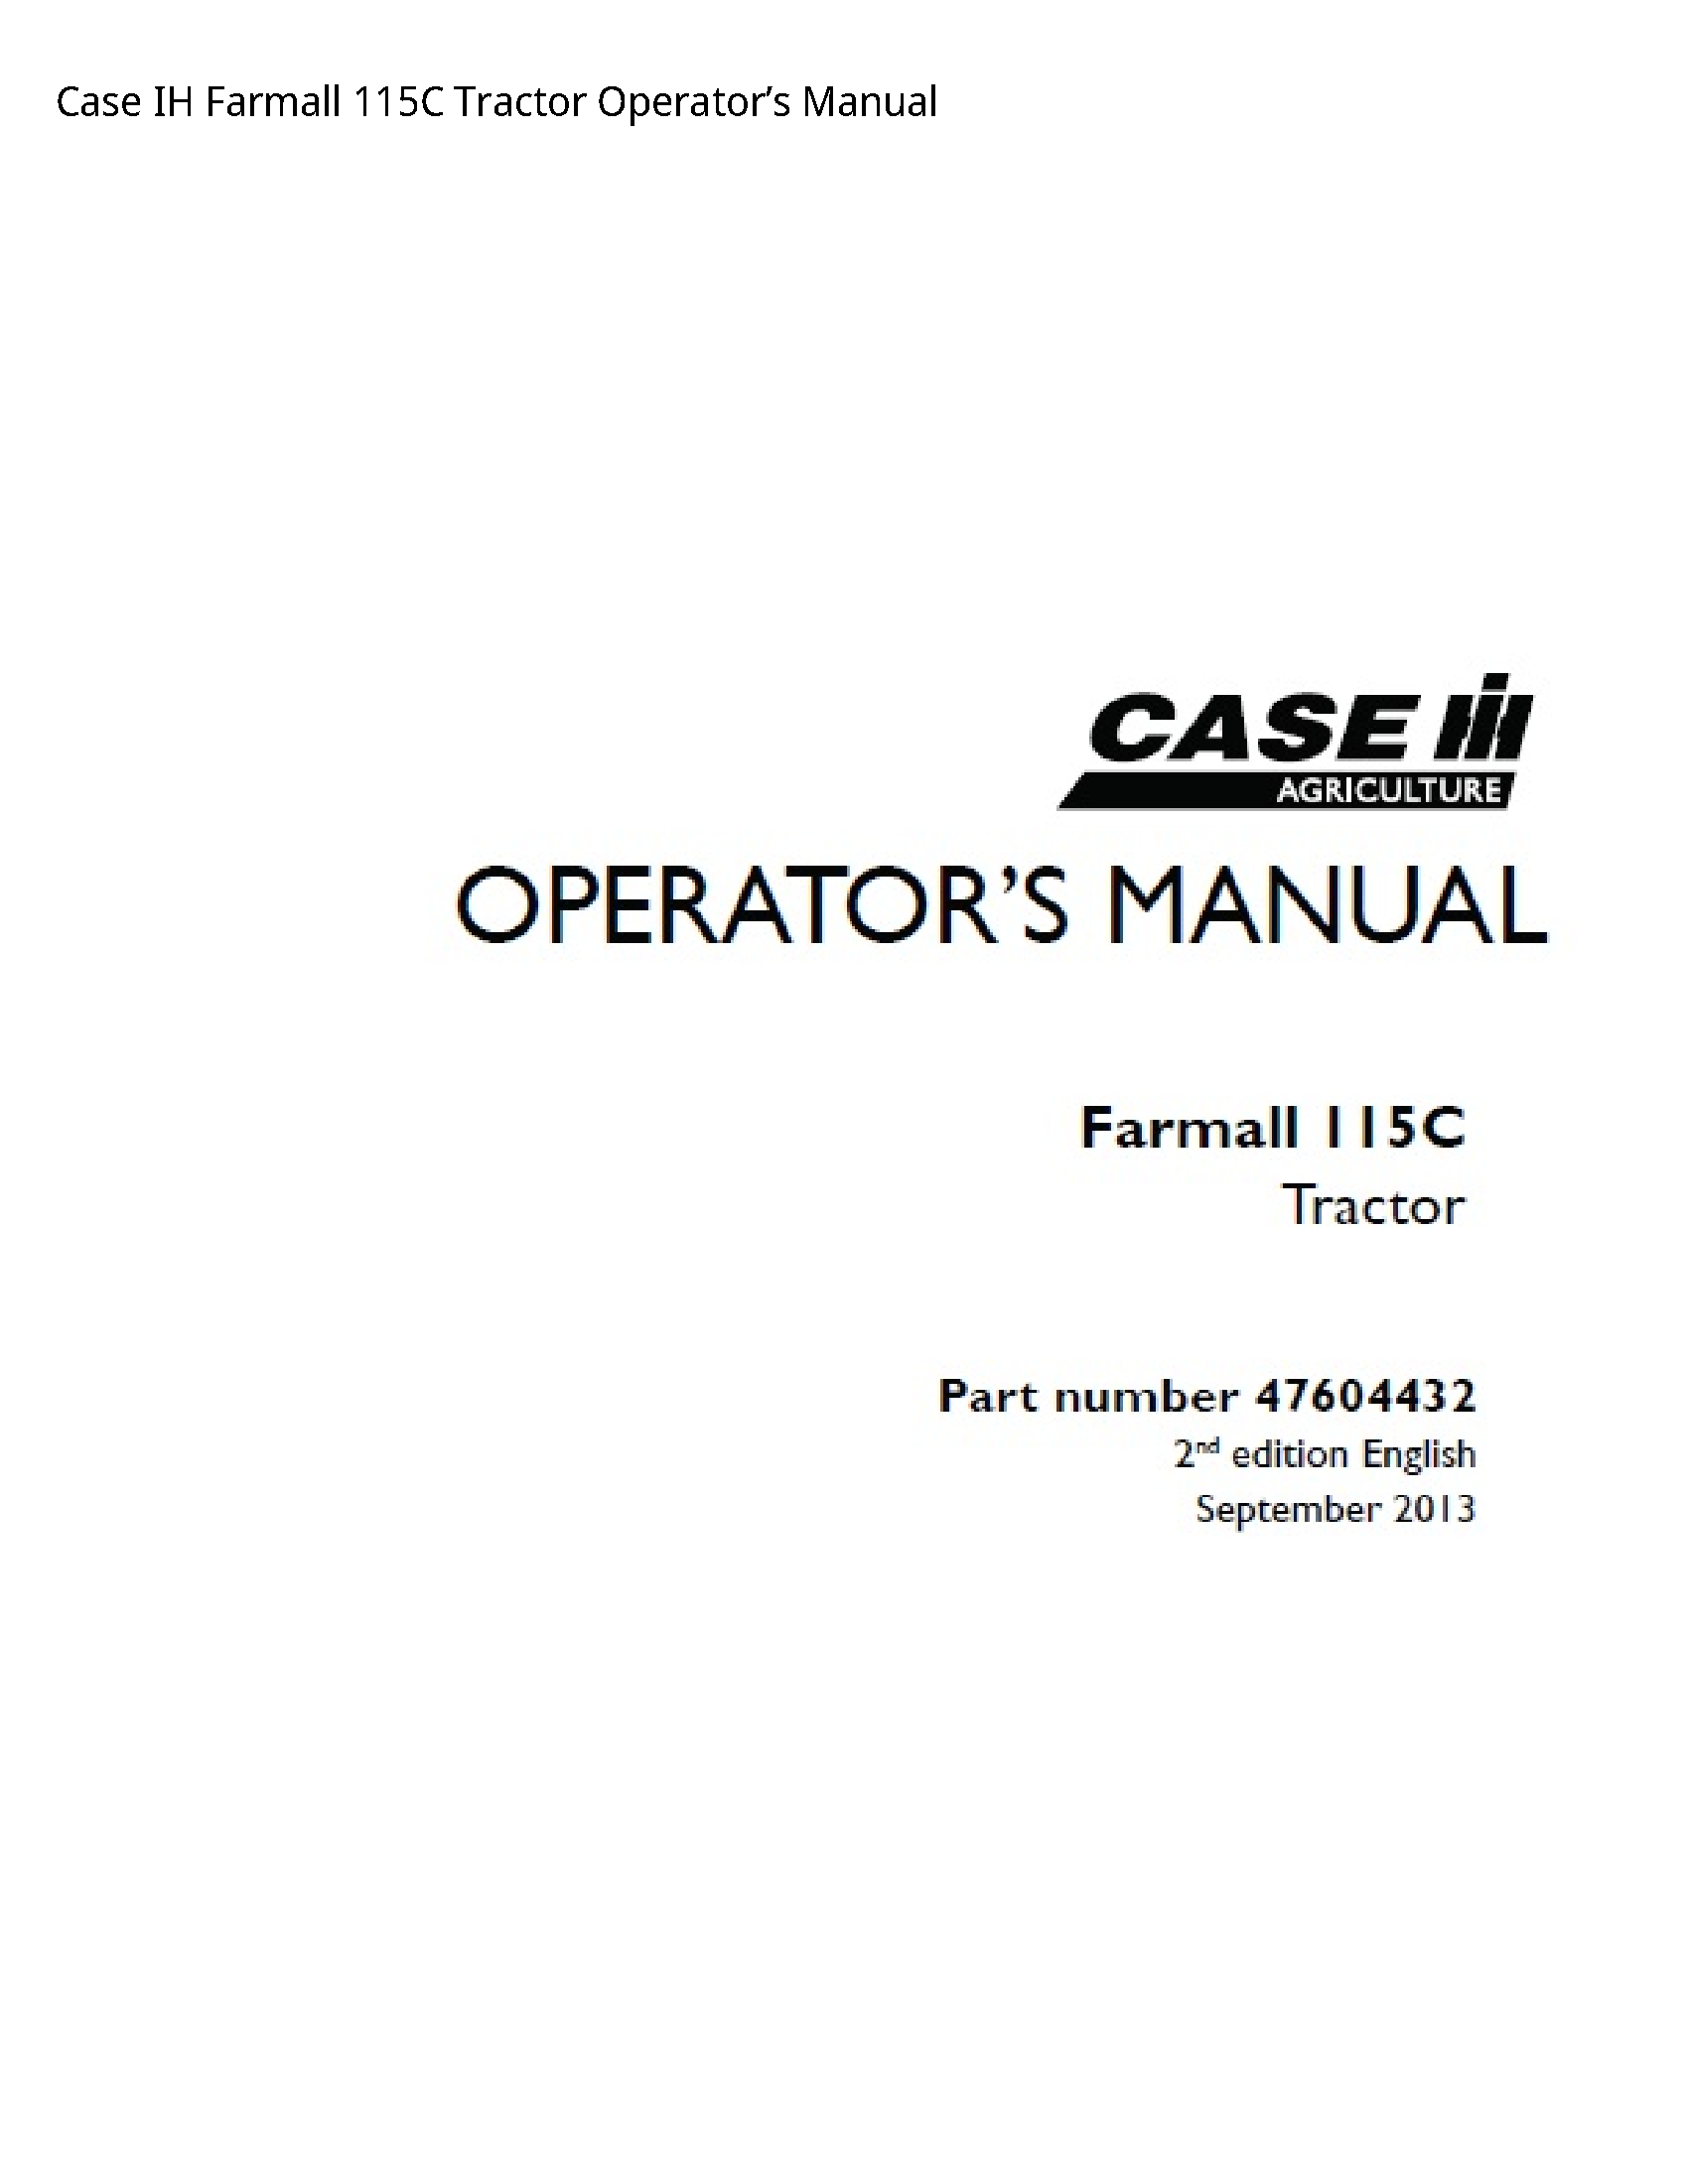 Case/Case IH 115C IH Farmall Tractor Operator’s manual